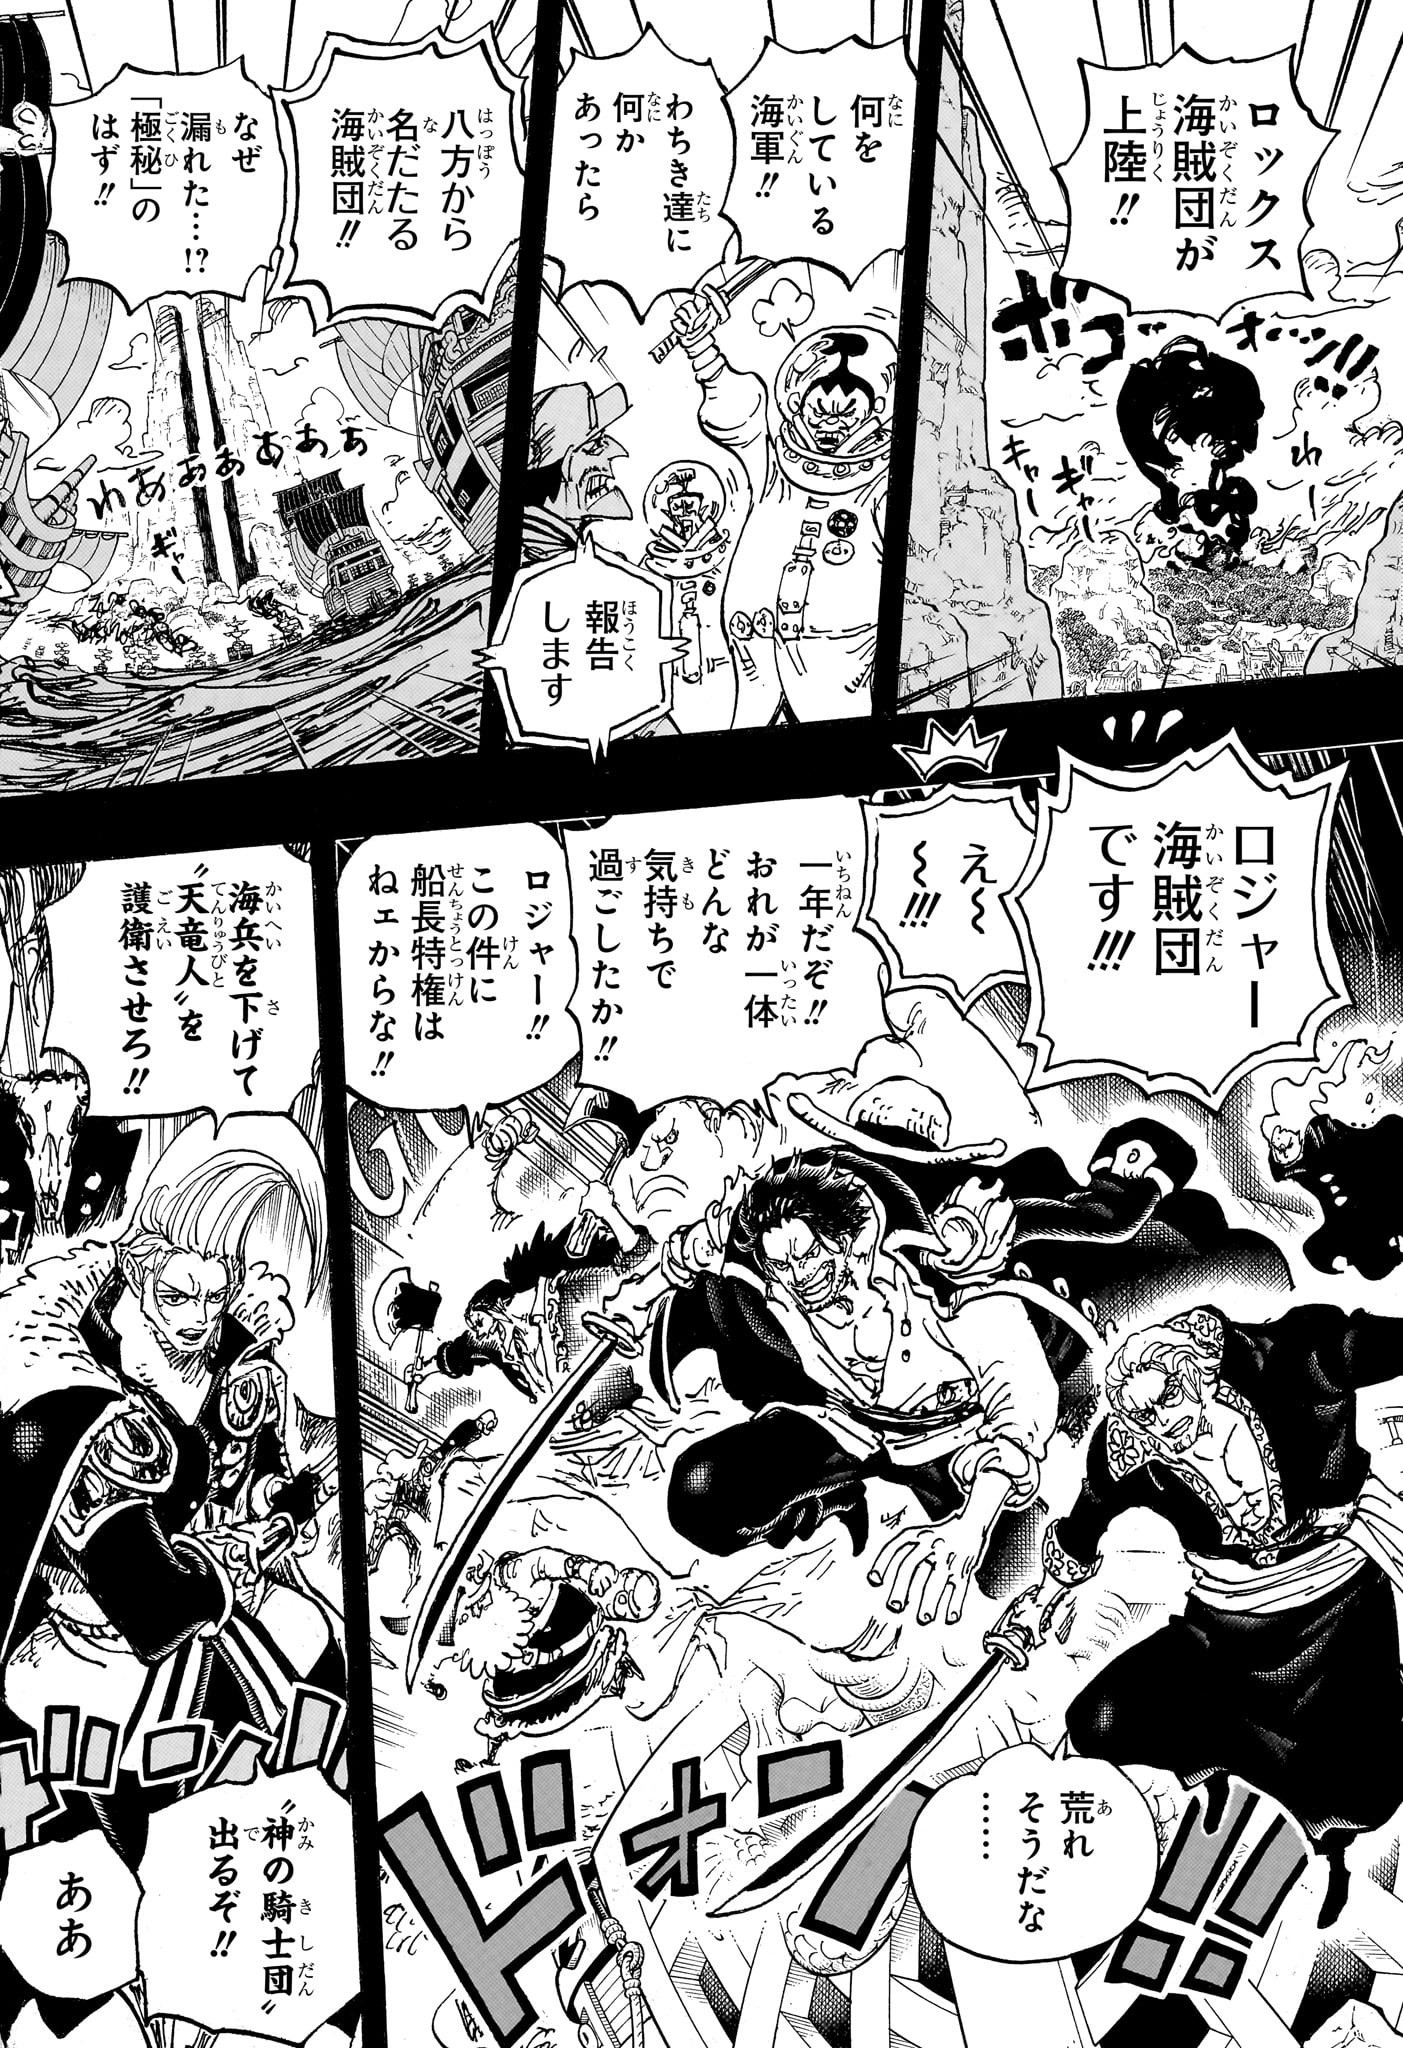 One Piece Chapter 1096 – Rawkuma